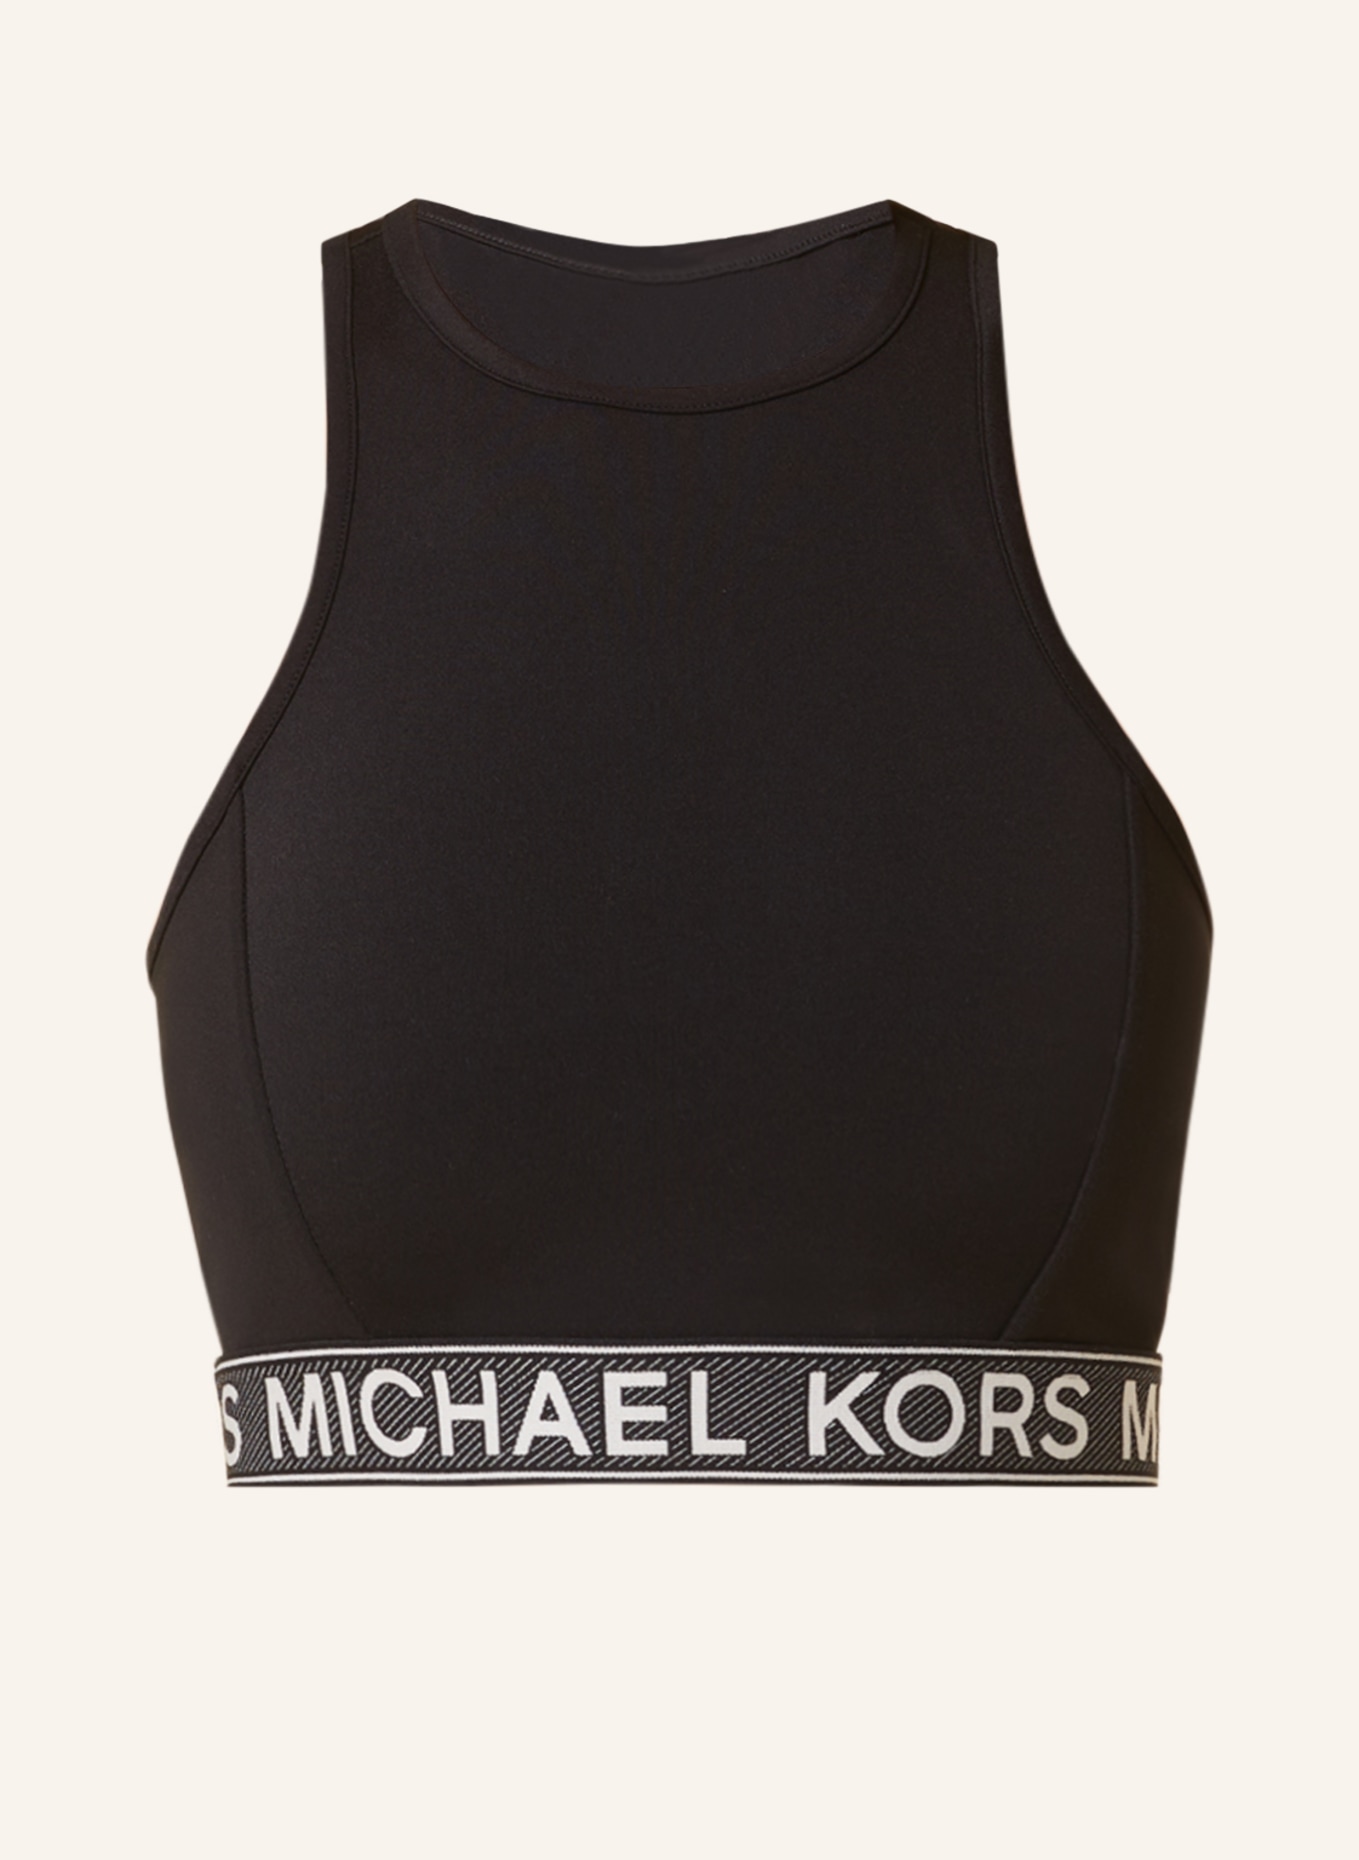 MICHAEL KORS Cropped-Top, Farbe: SCHWARZ (Bild 1)